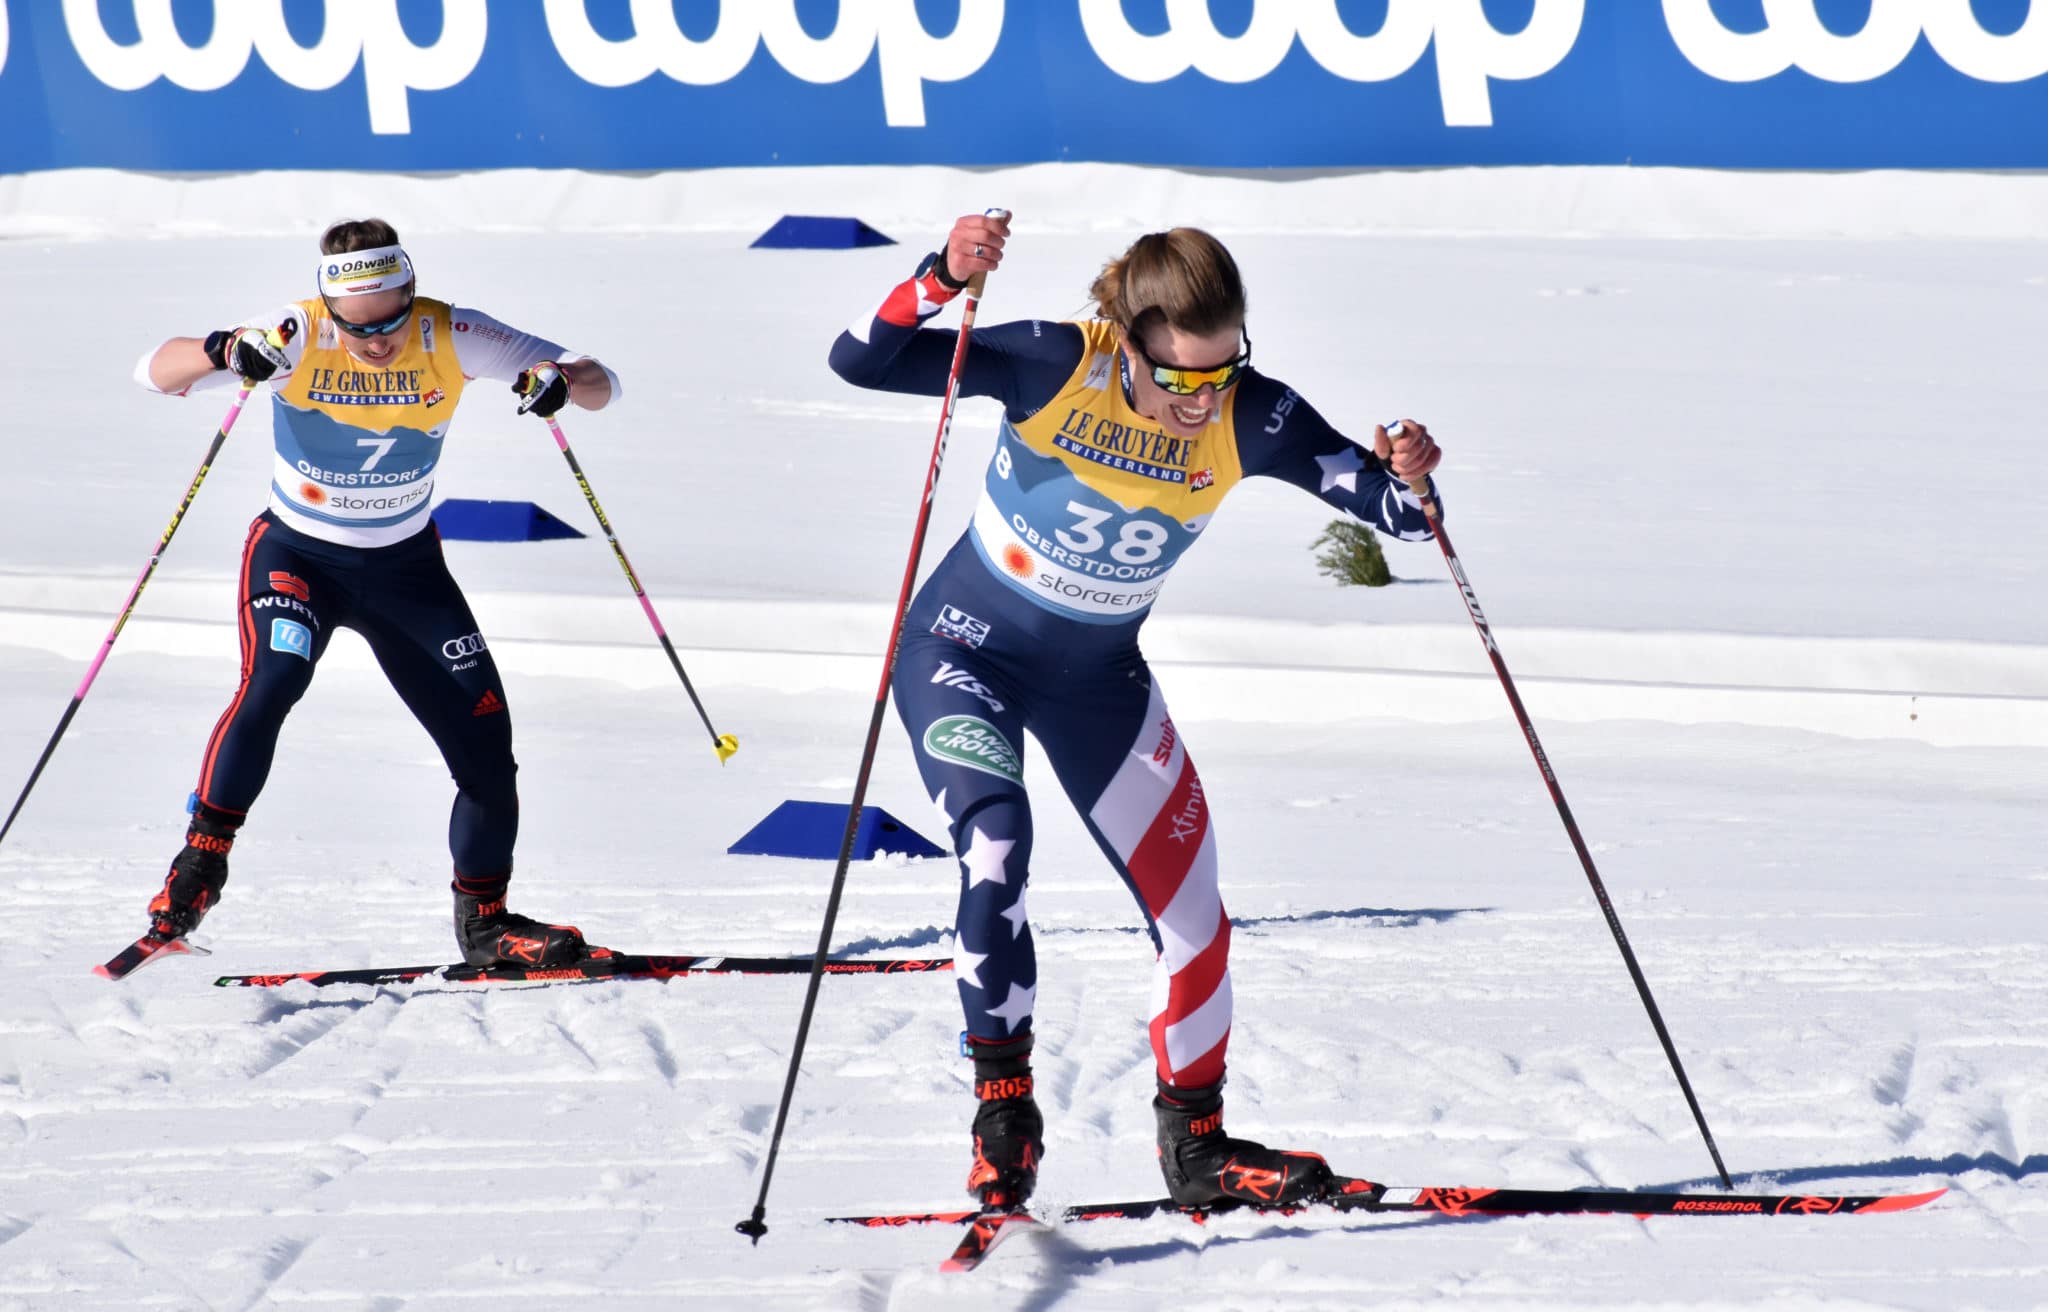 APU Nordic Ski Center ends the 2020-2021 World Cup Season